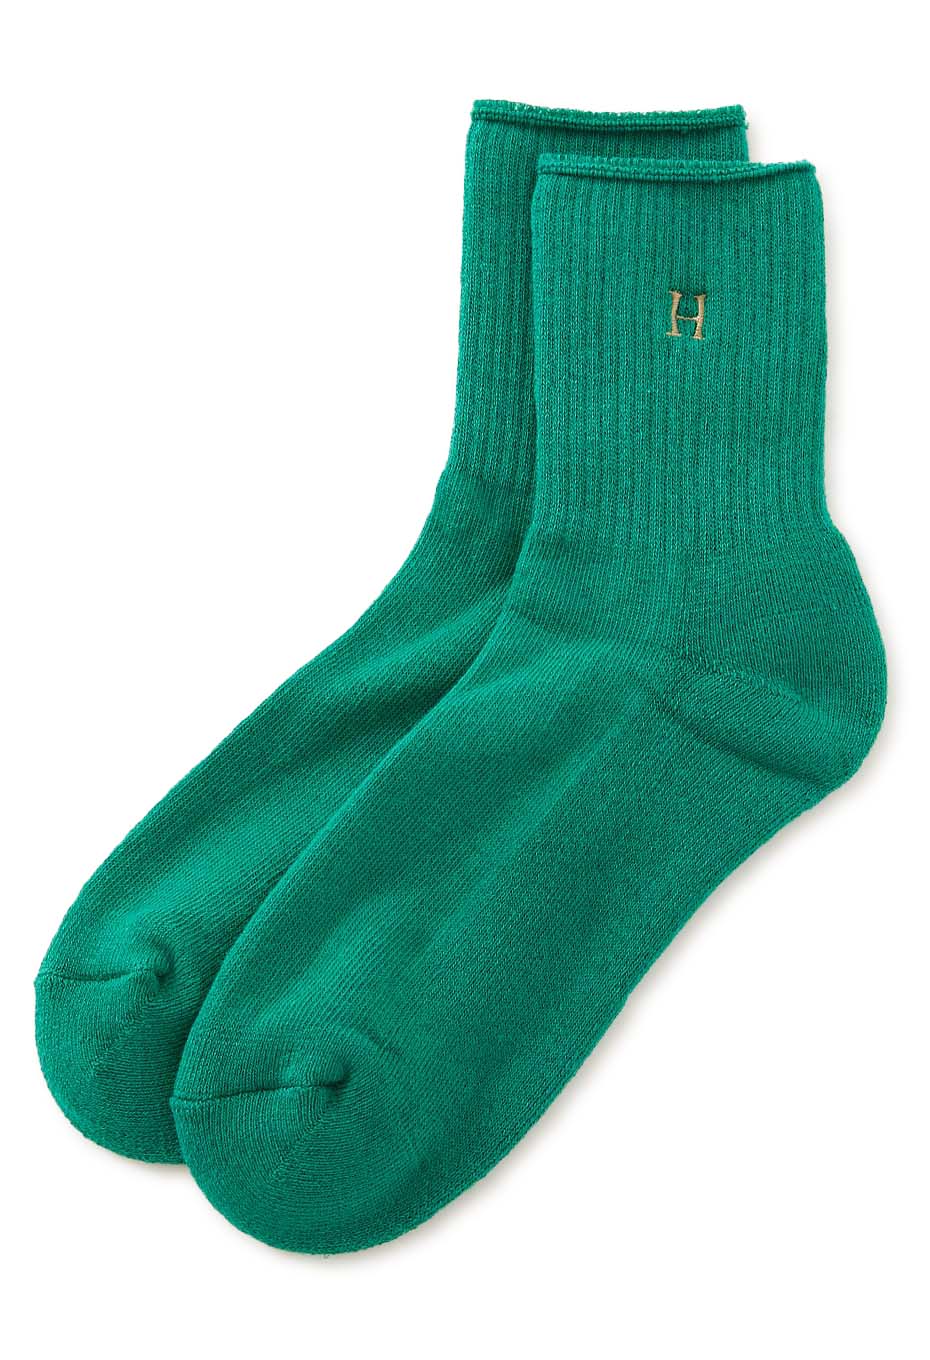 H embroidered pile short socks